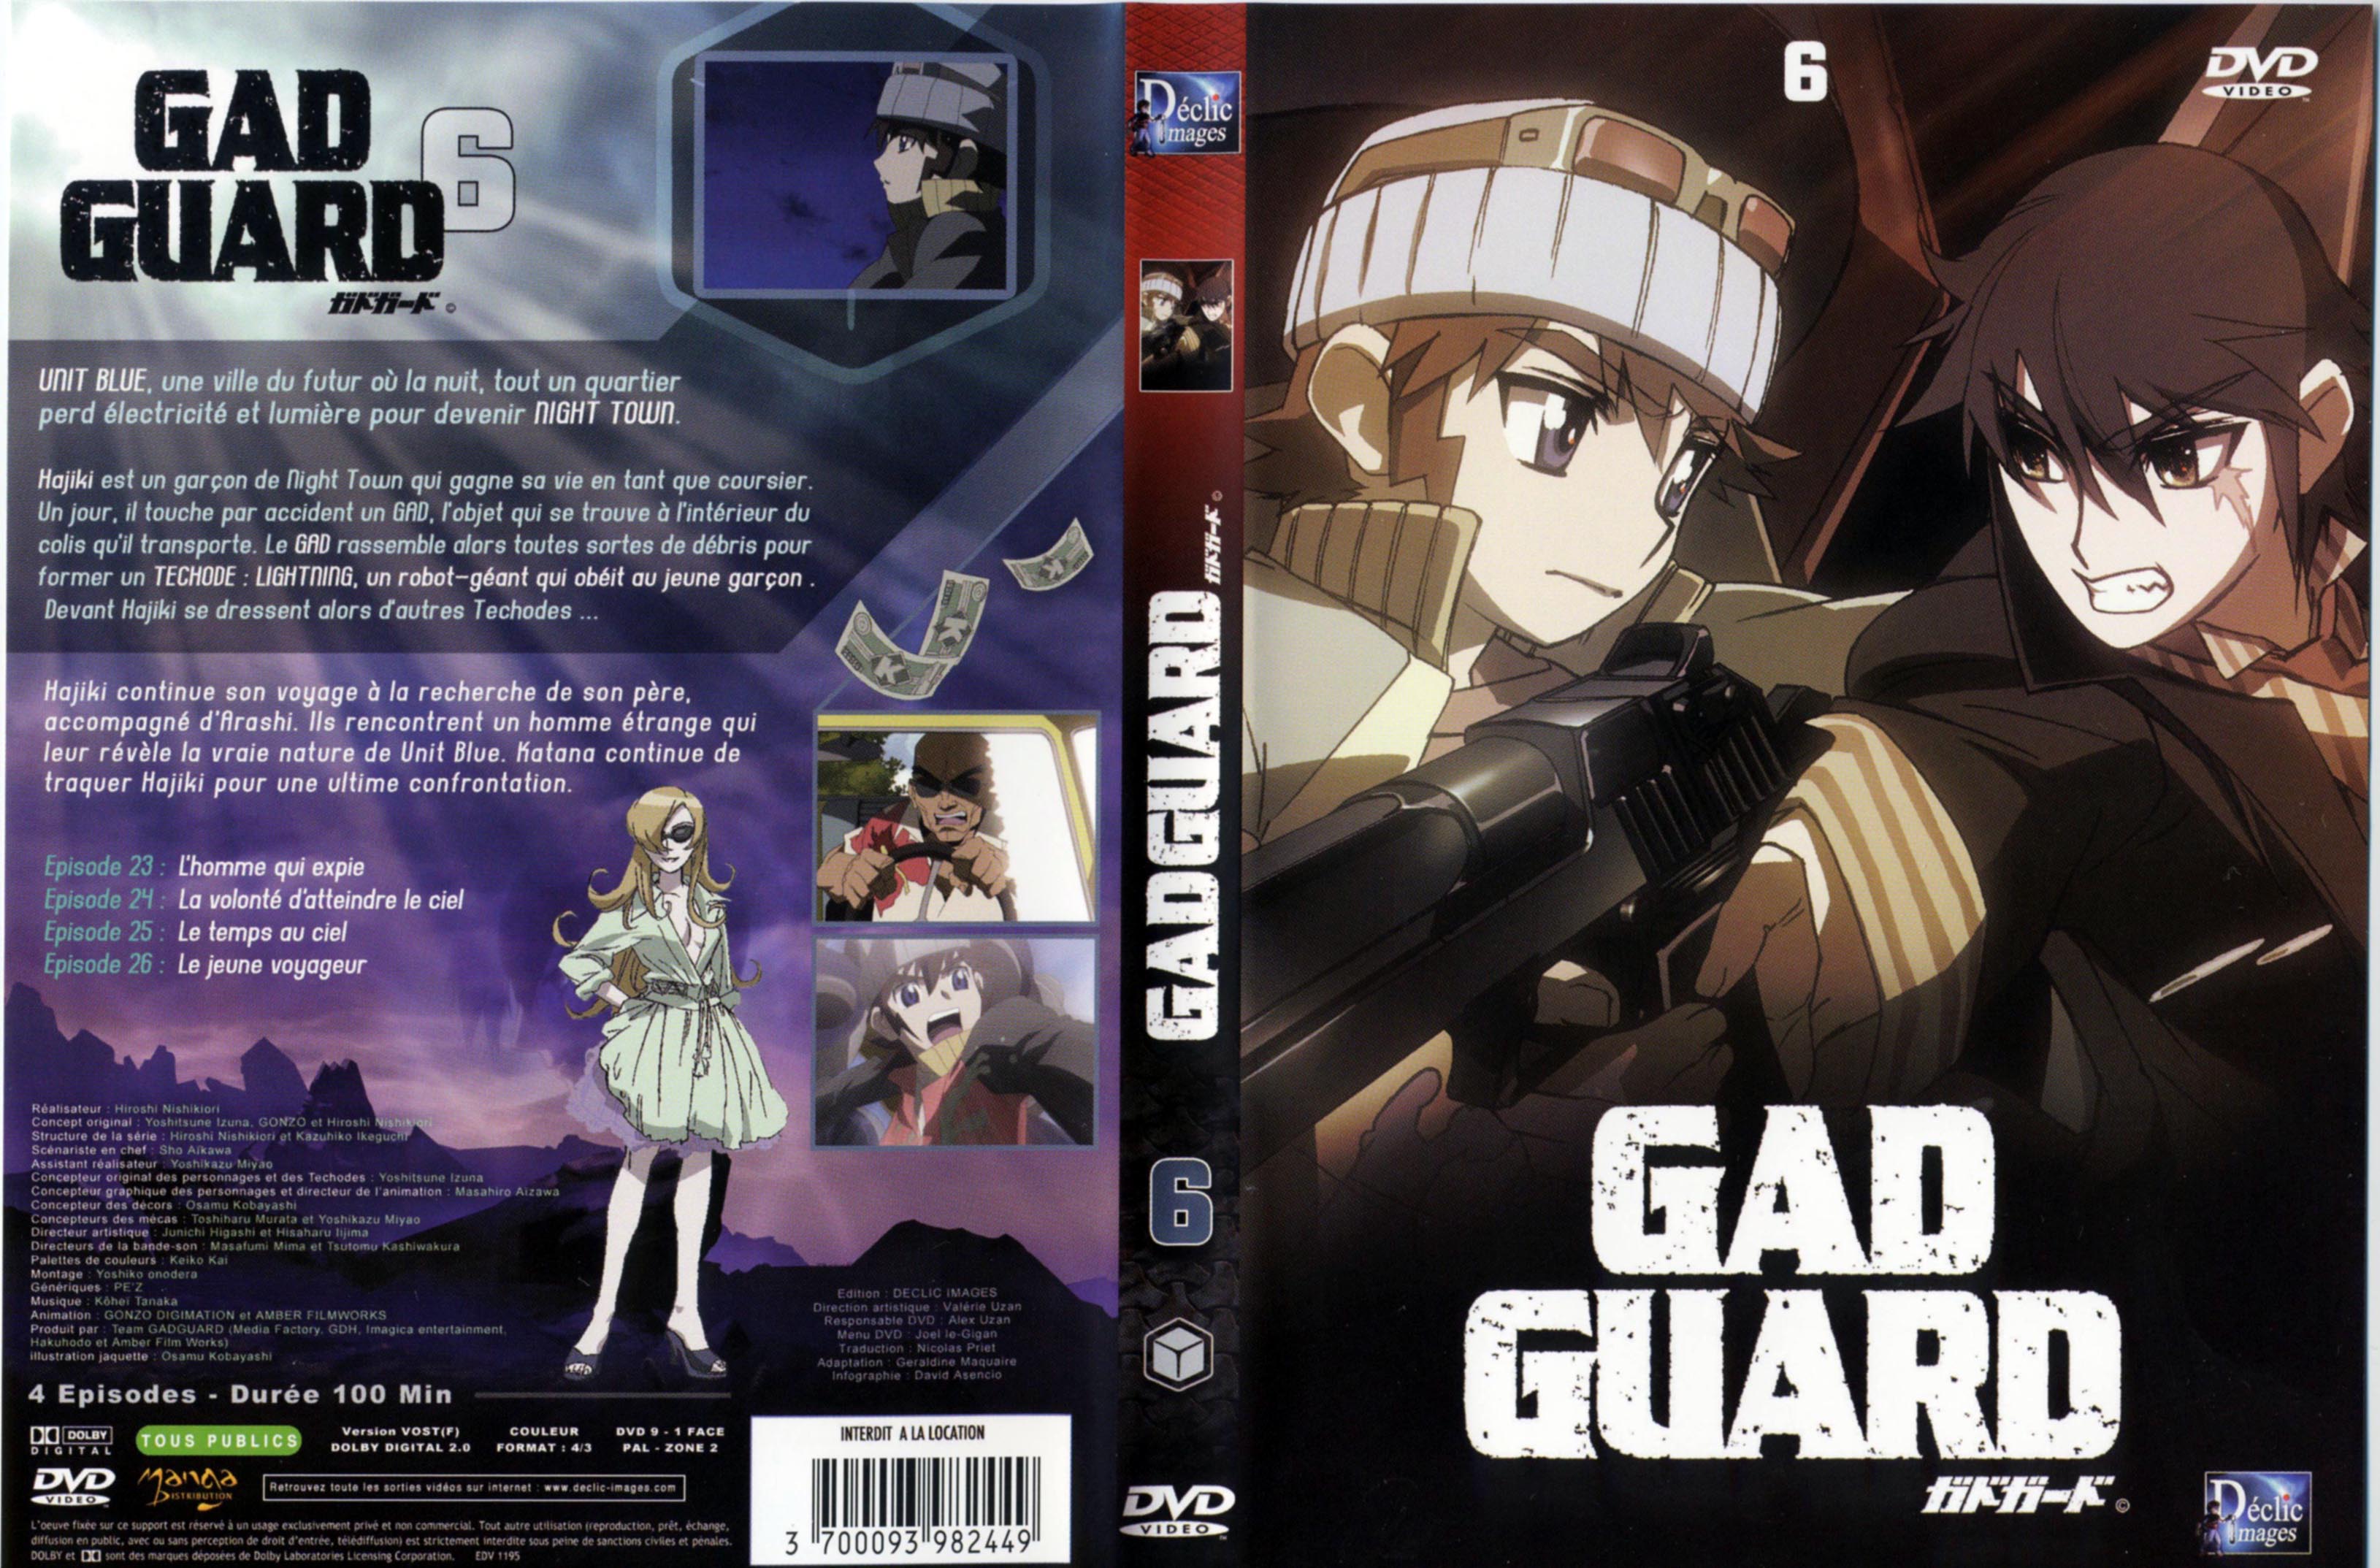 Jaquette DVD Gad Guard DVD 6